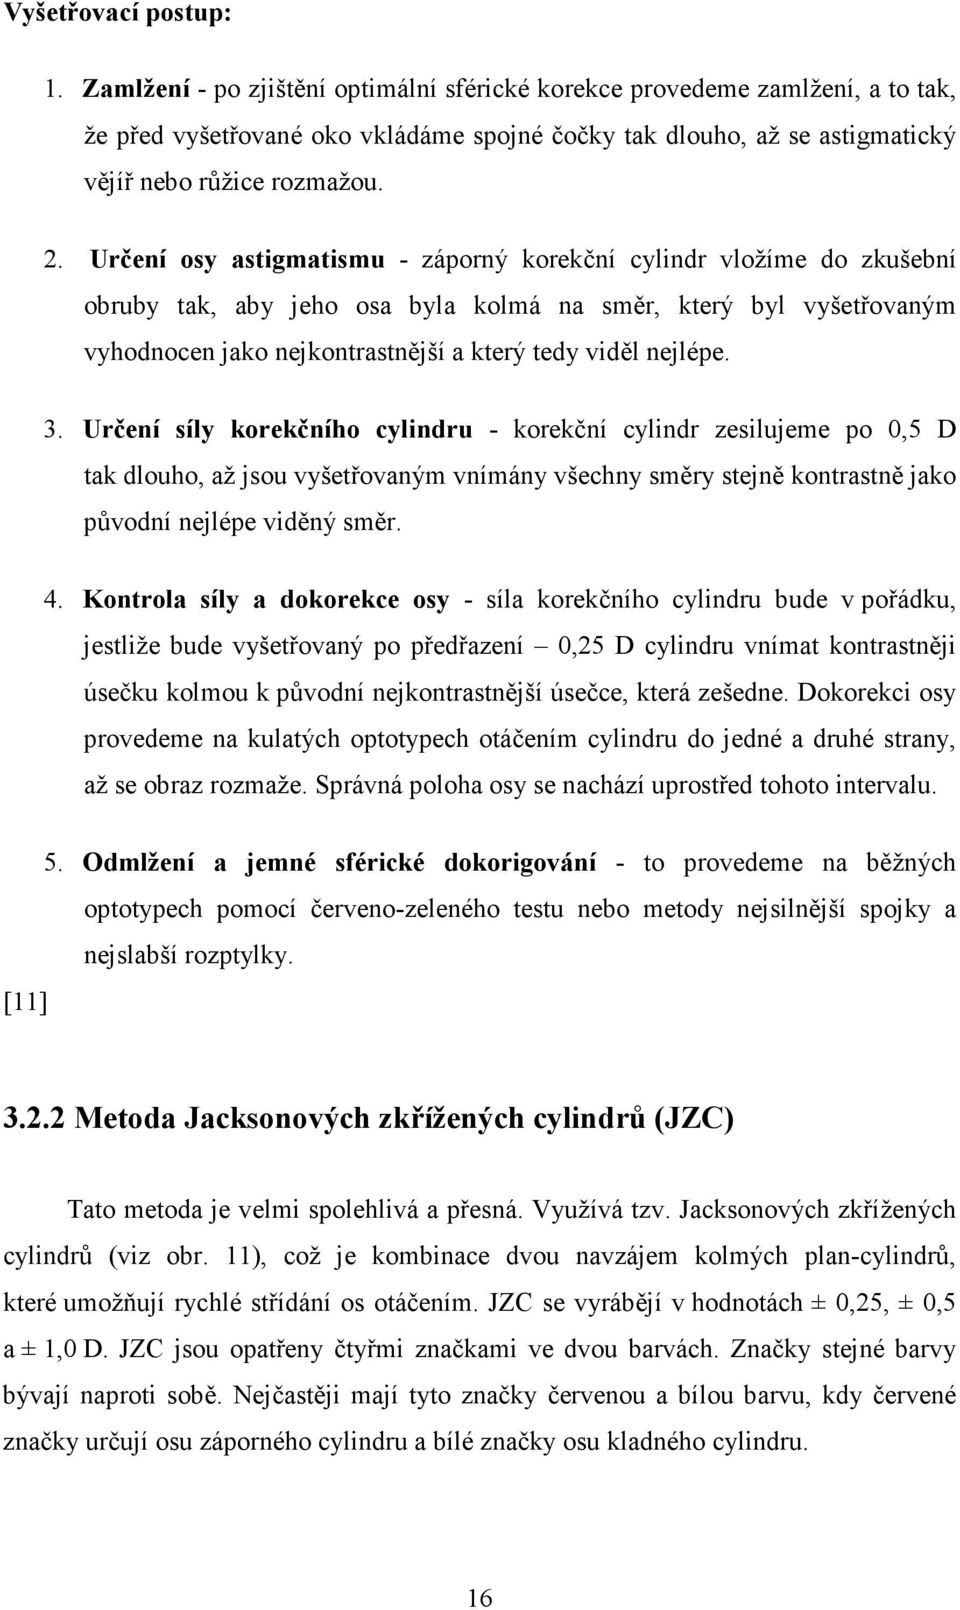 ASTIGMATISMUS A JEHO KOREKCE - PDF Stažení zdarma